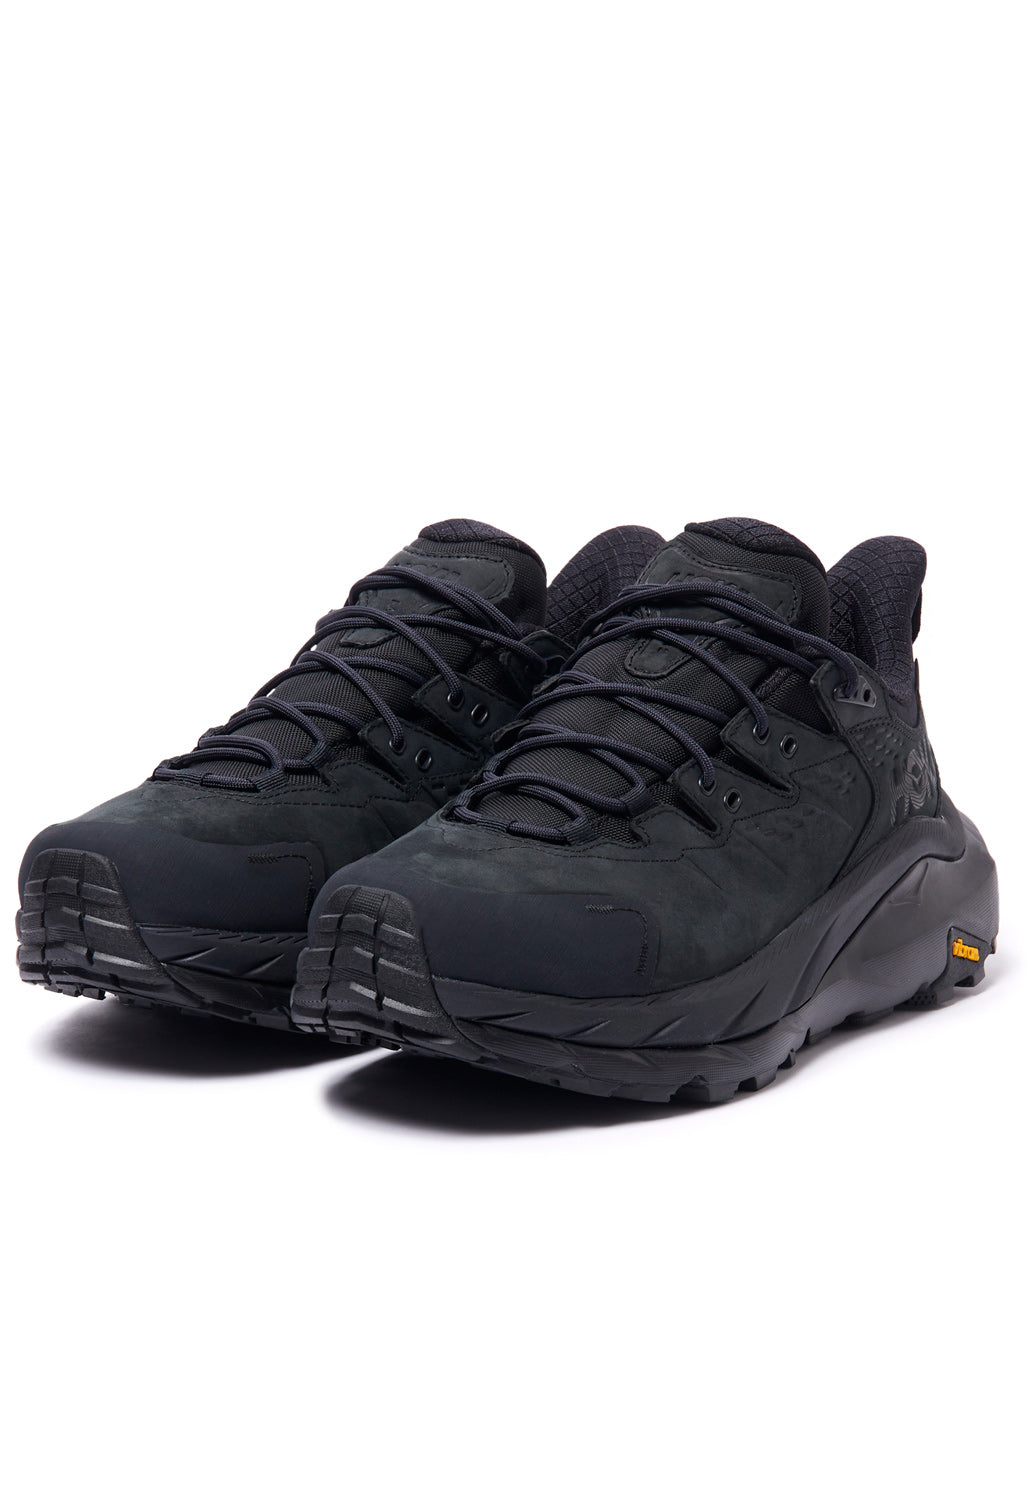 Hoka Kaha 2 Low GORE-TEX Men's Shoes - Black/Black